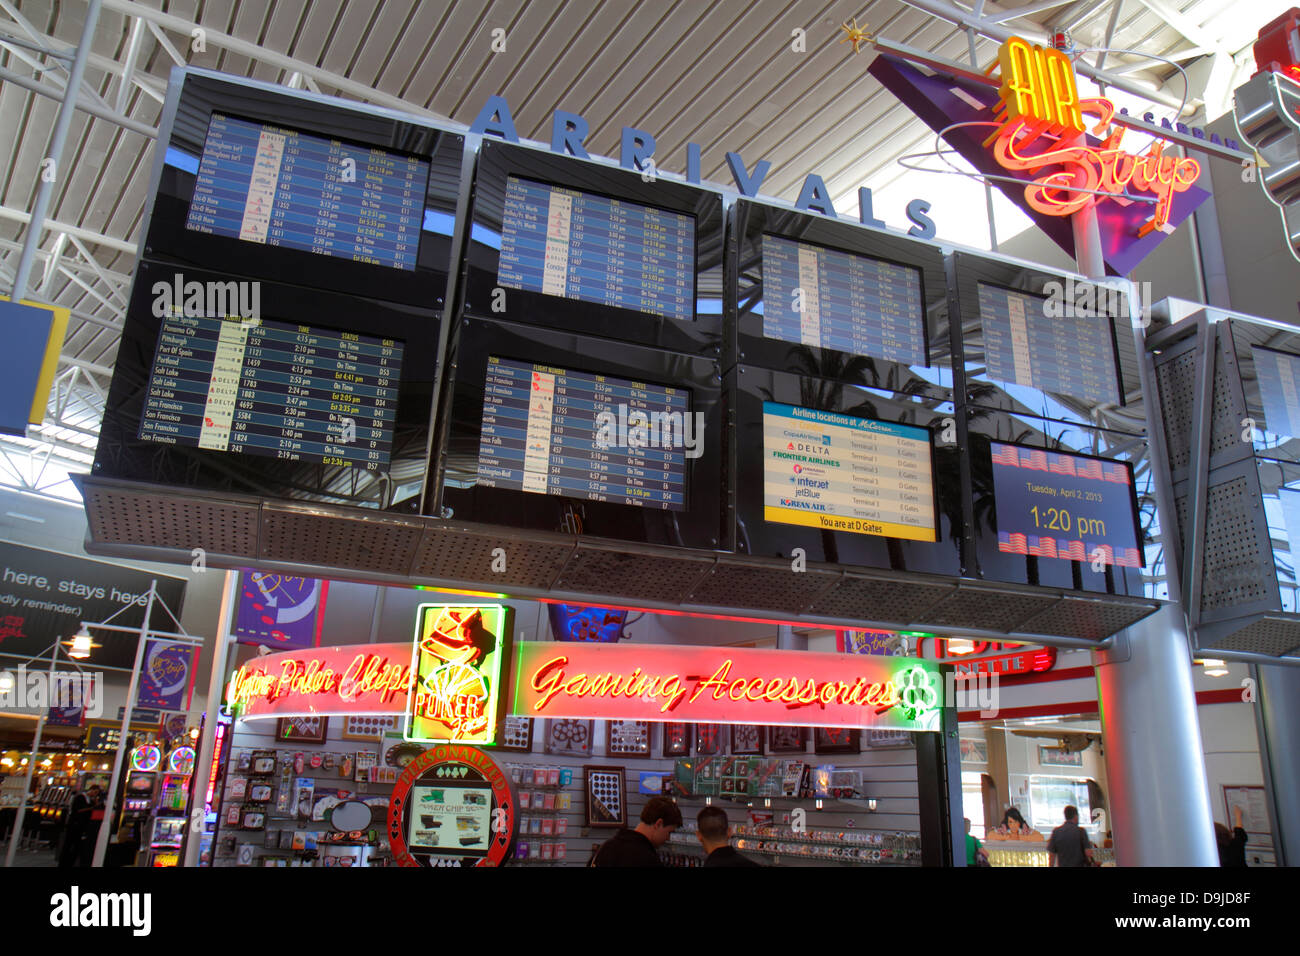 Las Vegas Nevada,McCarran International Airport,LAS,terminal,gate,monitors, arrivals,schedules,shopping shopper shoppers shop shops market markets mark  Stock Photo - Alamy